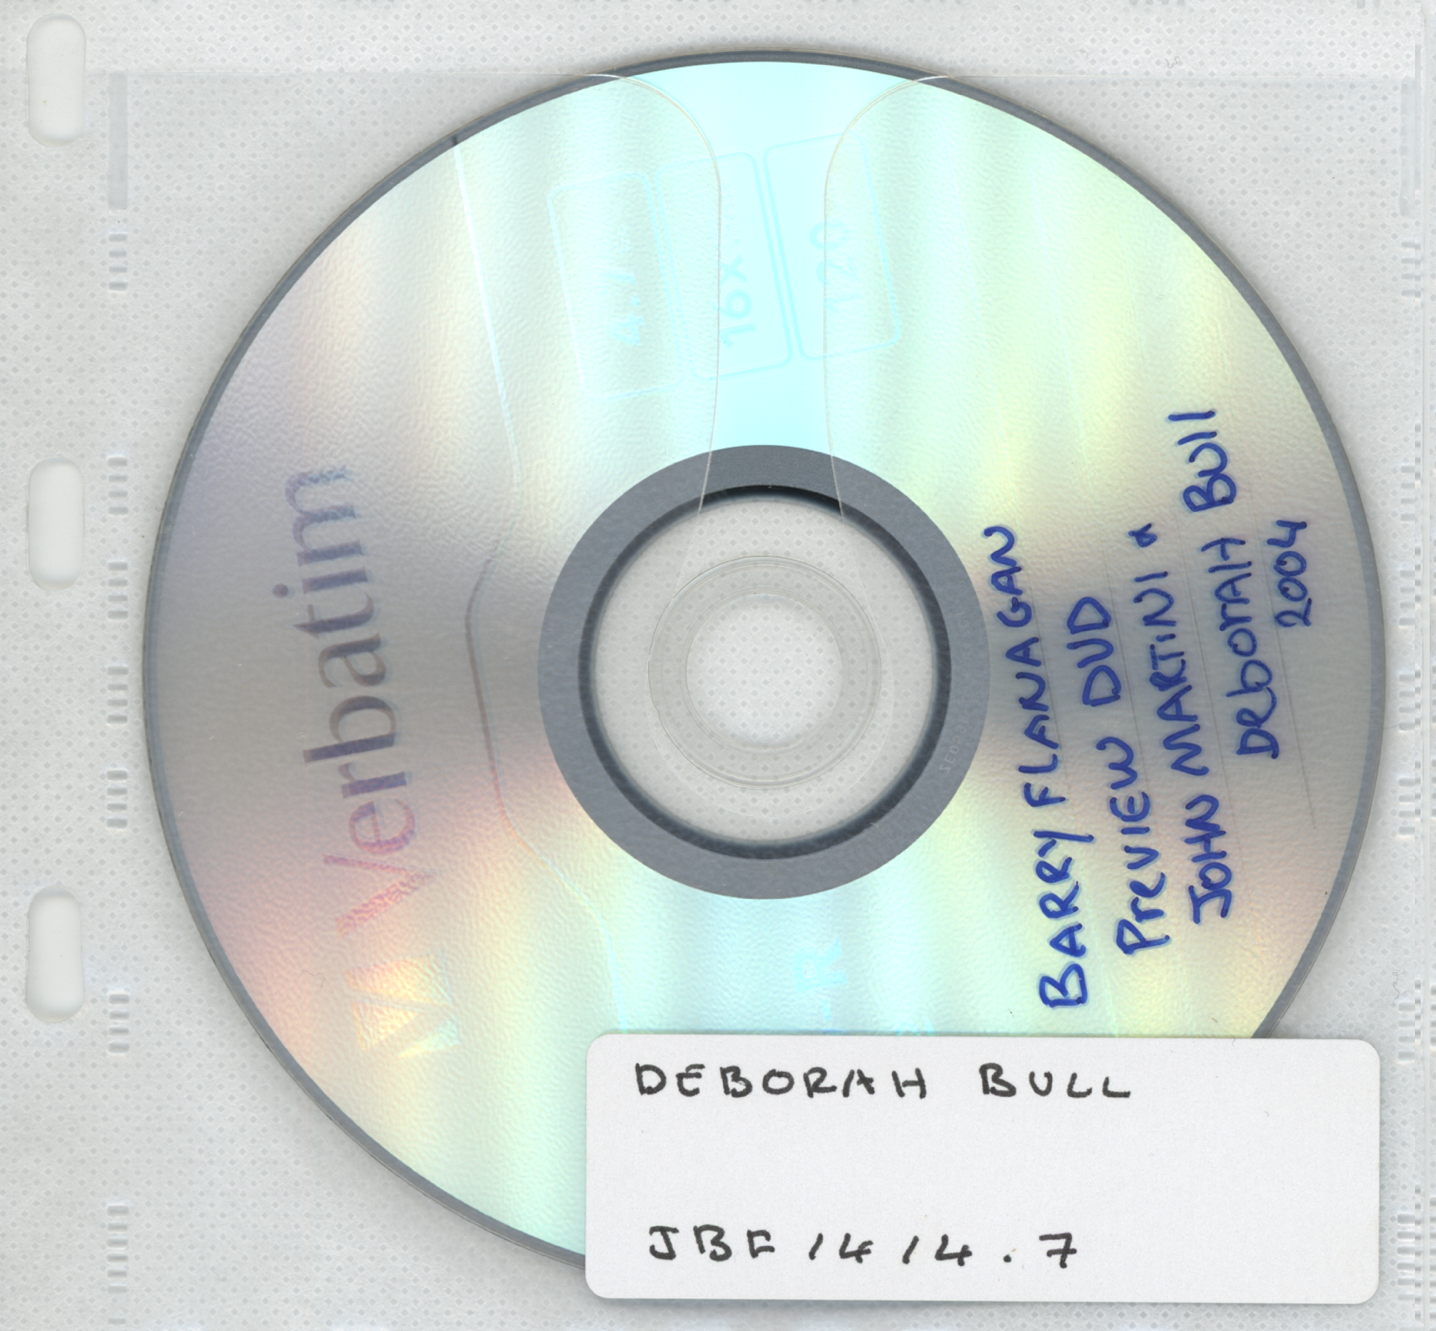 Deborah Bull documentary and footage (2002-2004)